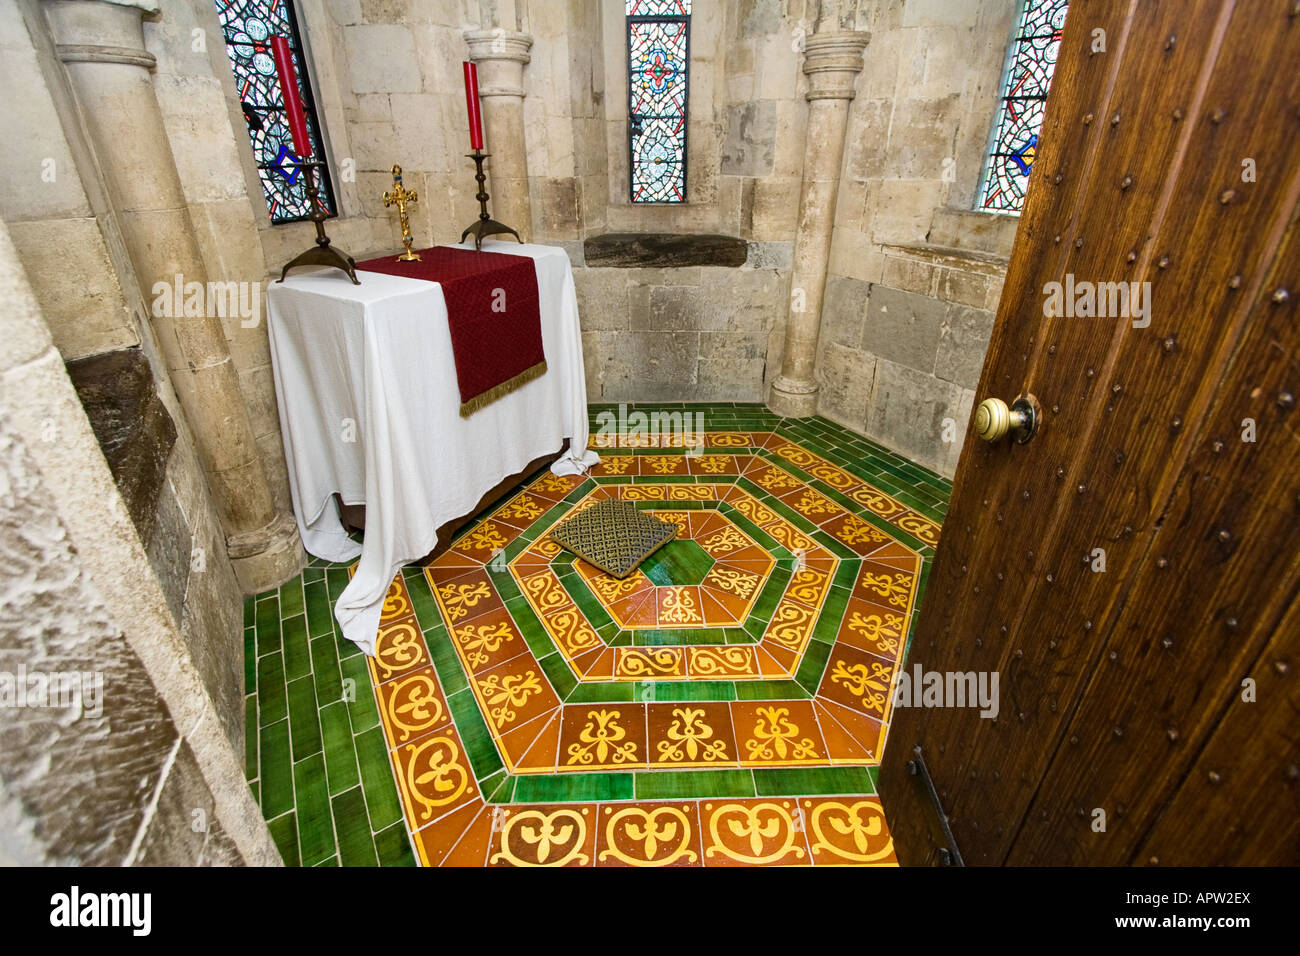 King's prayer room tower of London London UK Stock Photo